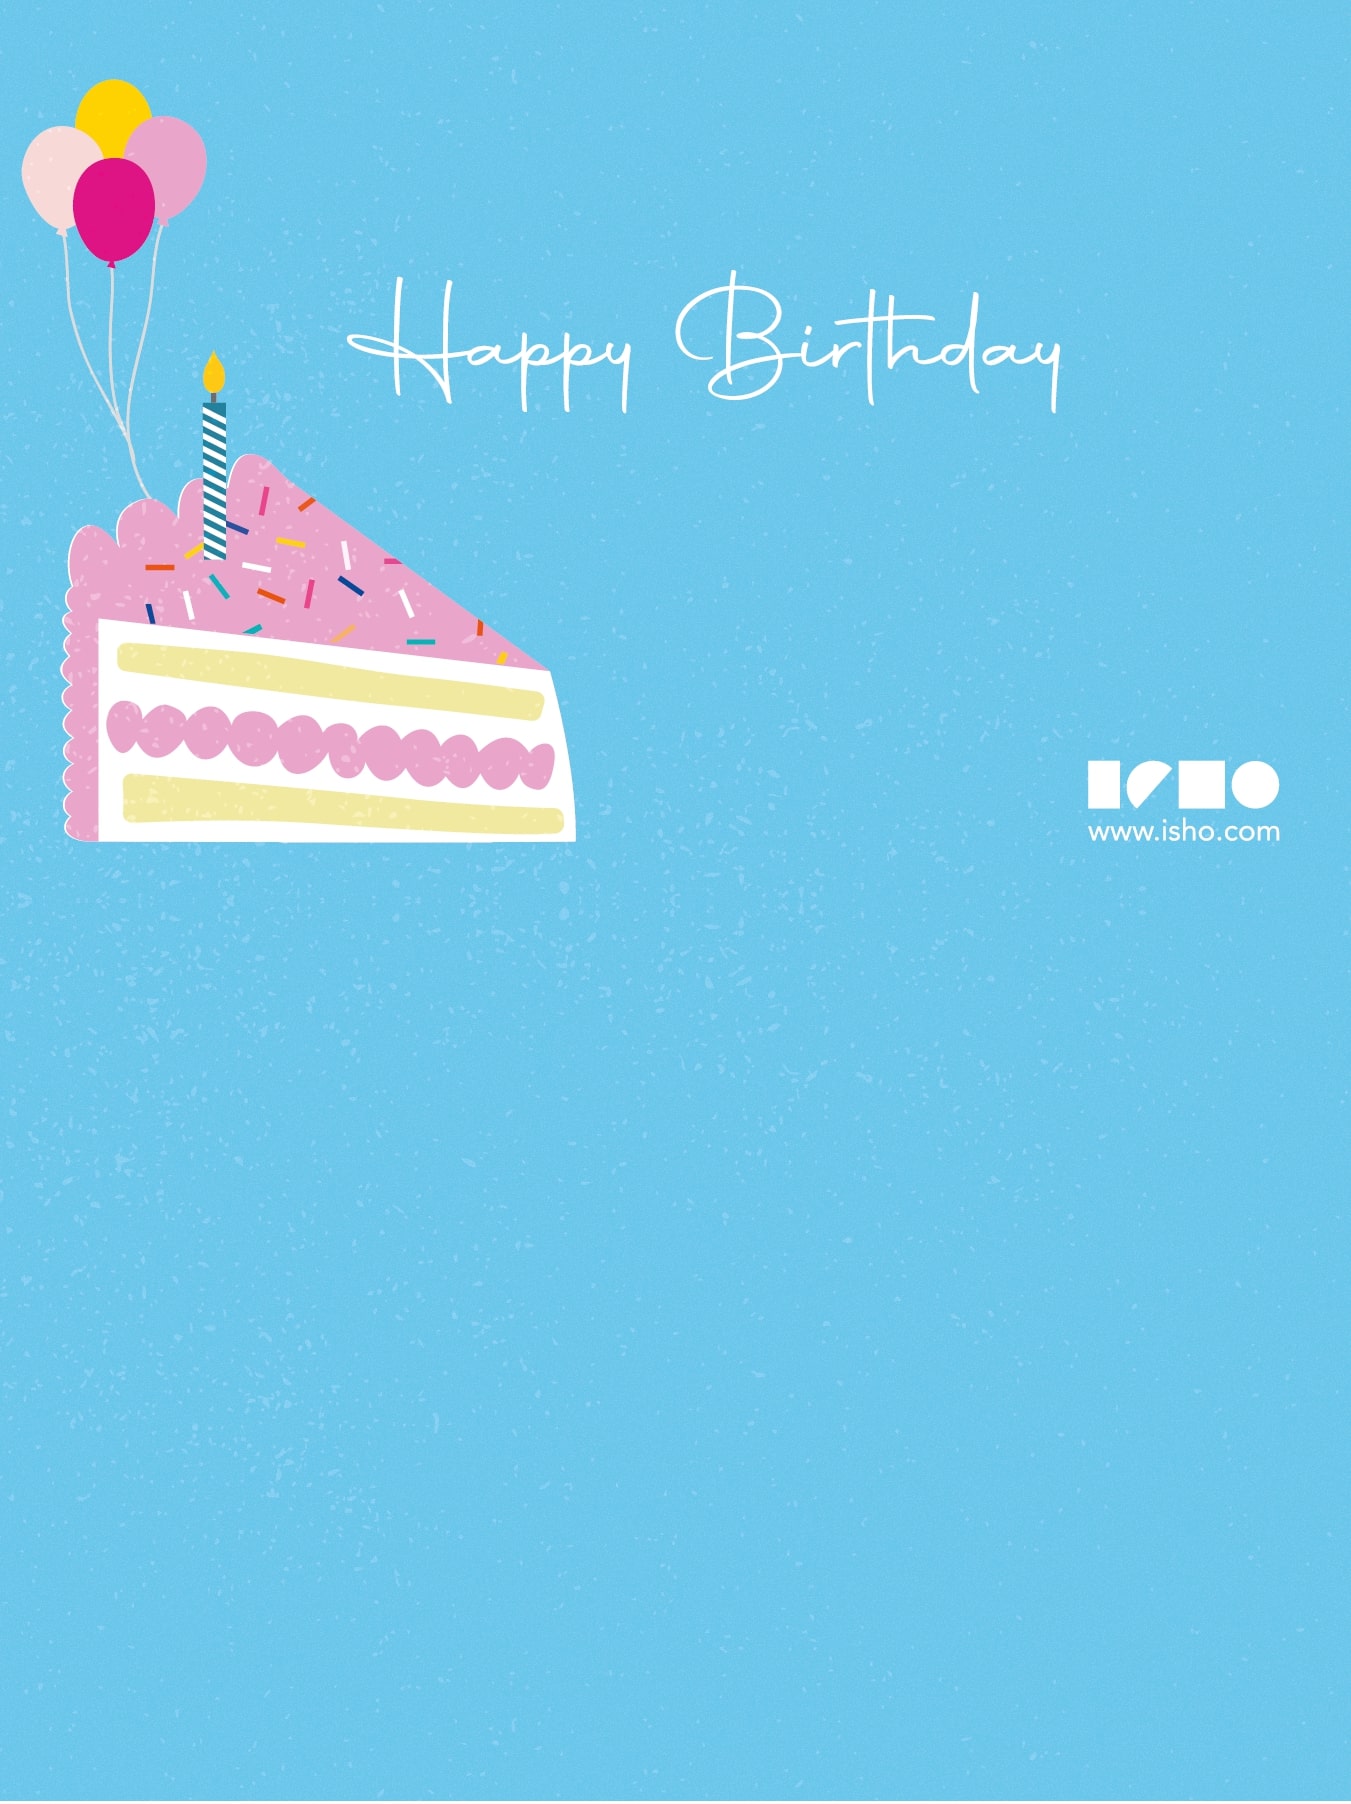 Happy Birthday Wish Card